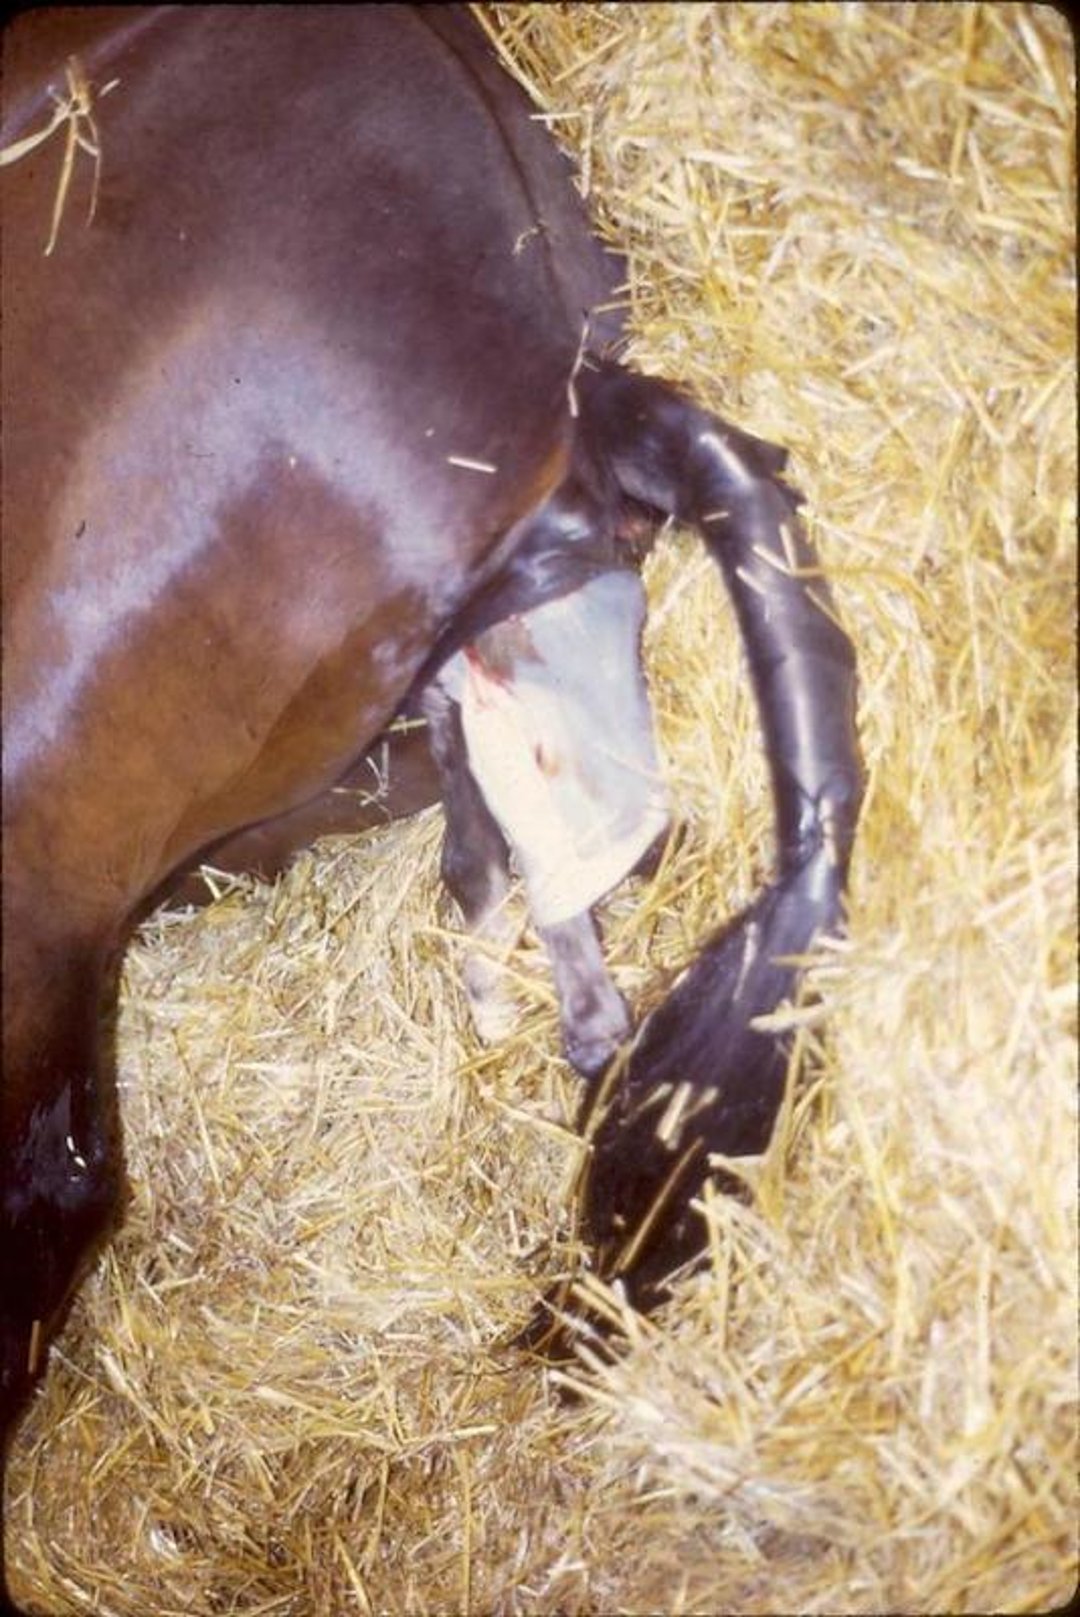 Stage II parturition, foal's legs